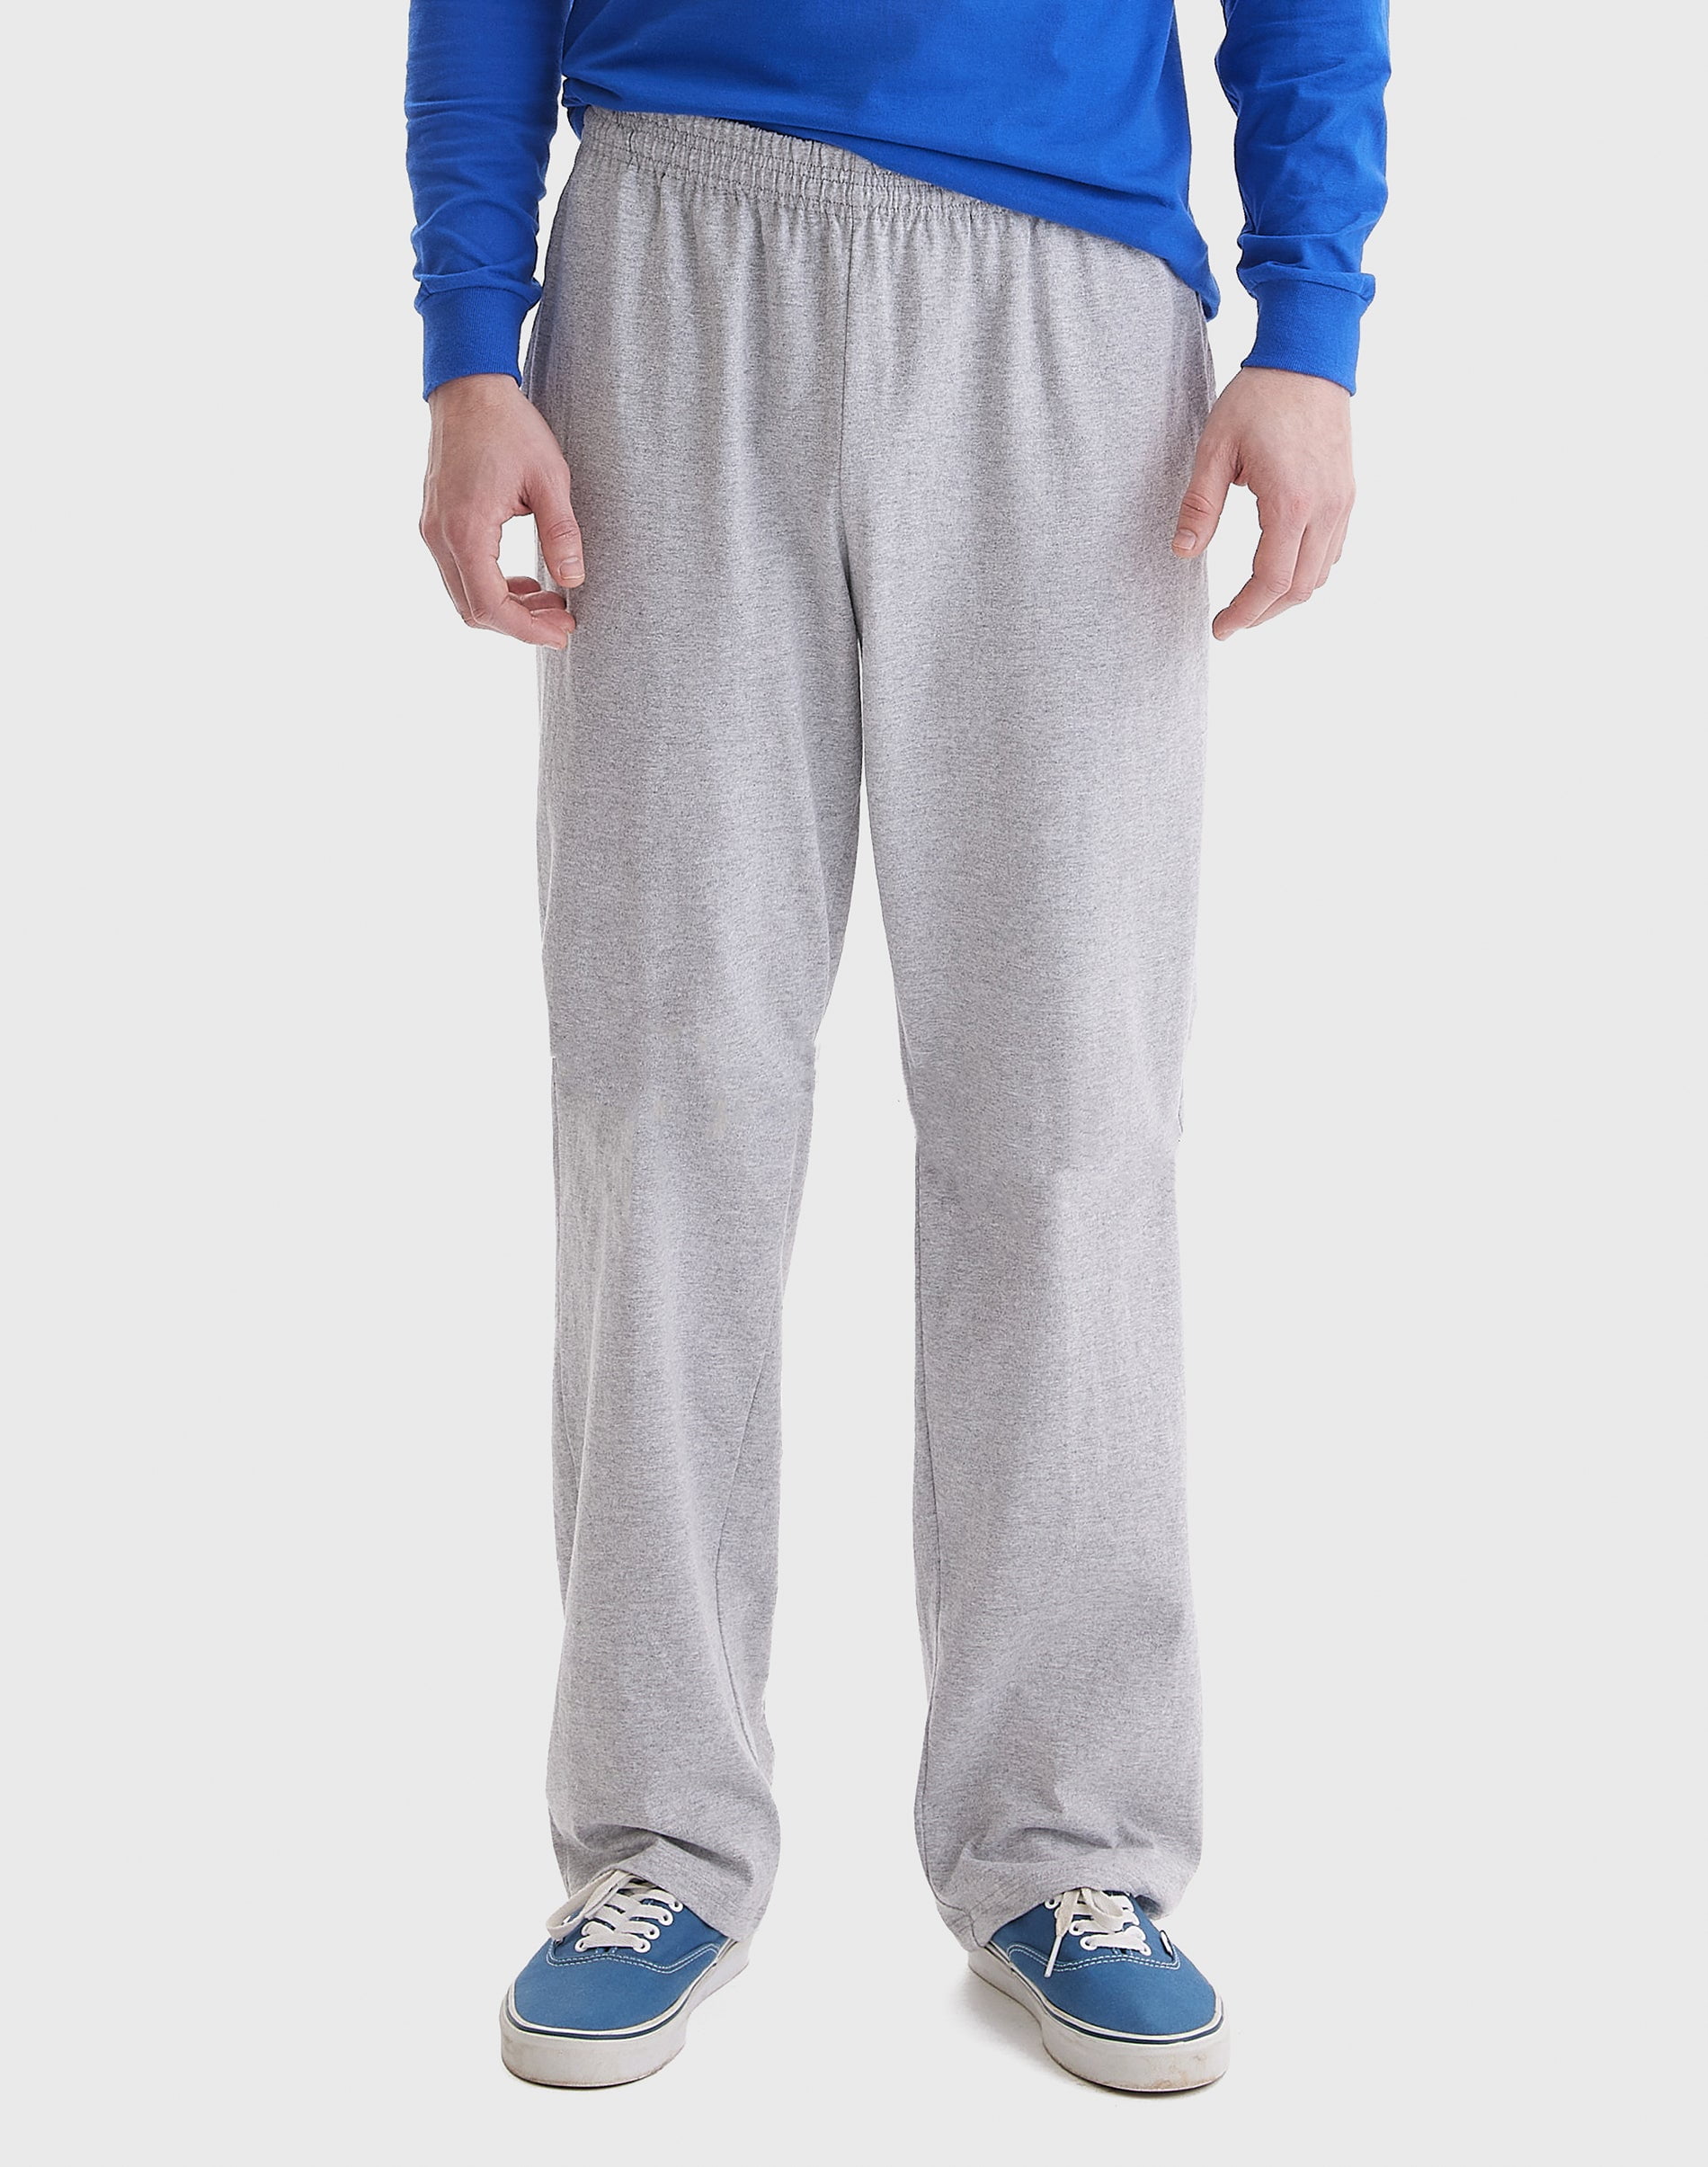 Hanes Essentials Men's Cotton Jersey Pants, 33